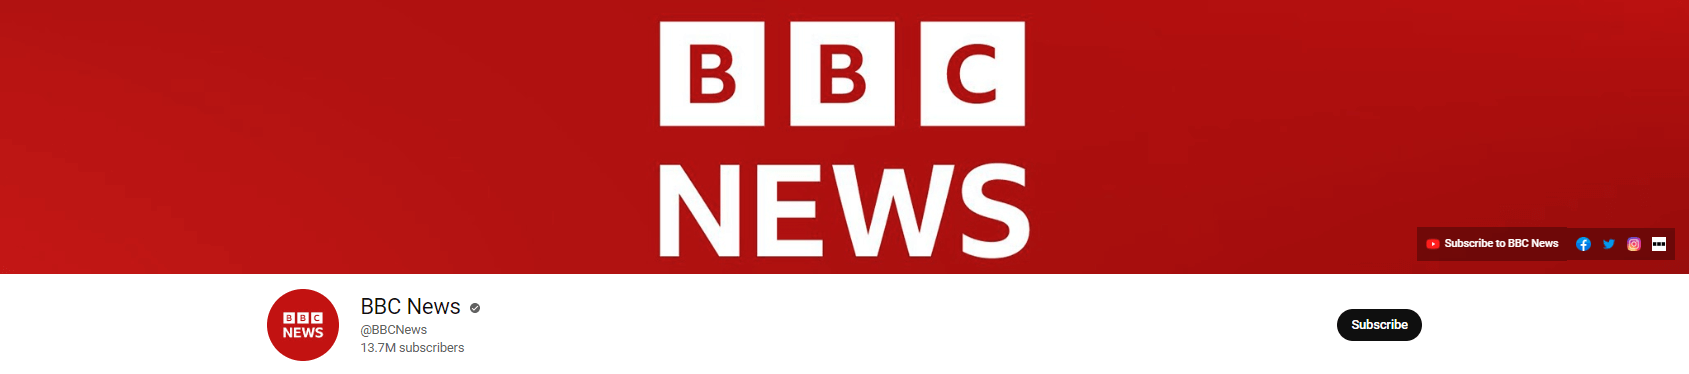 BBC News Channel